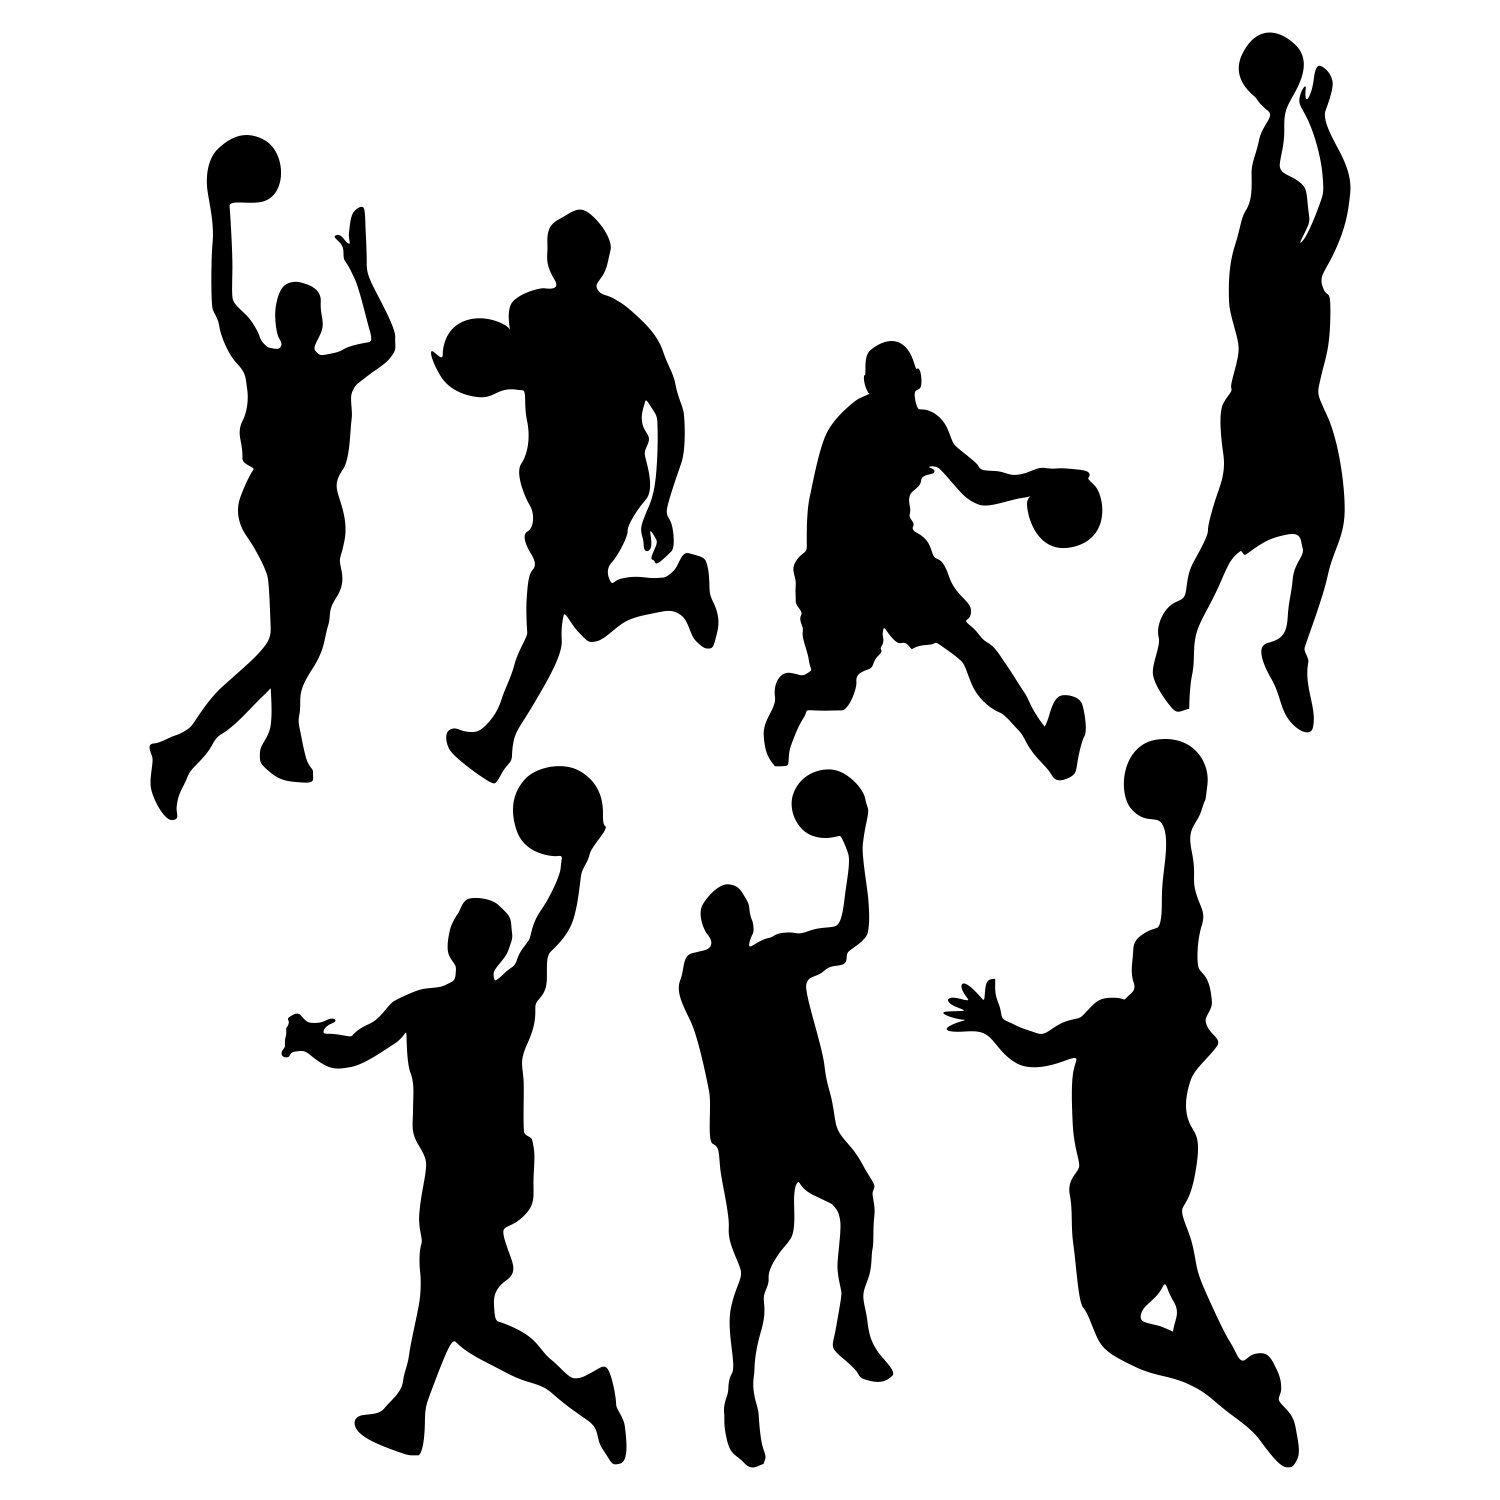 free vector basketball clipart - photo #42